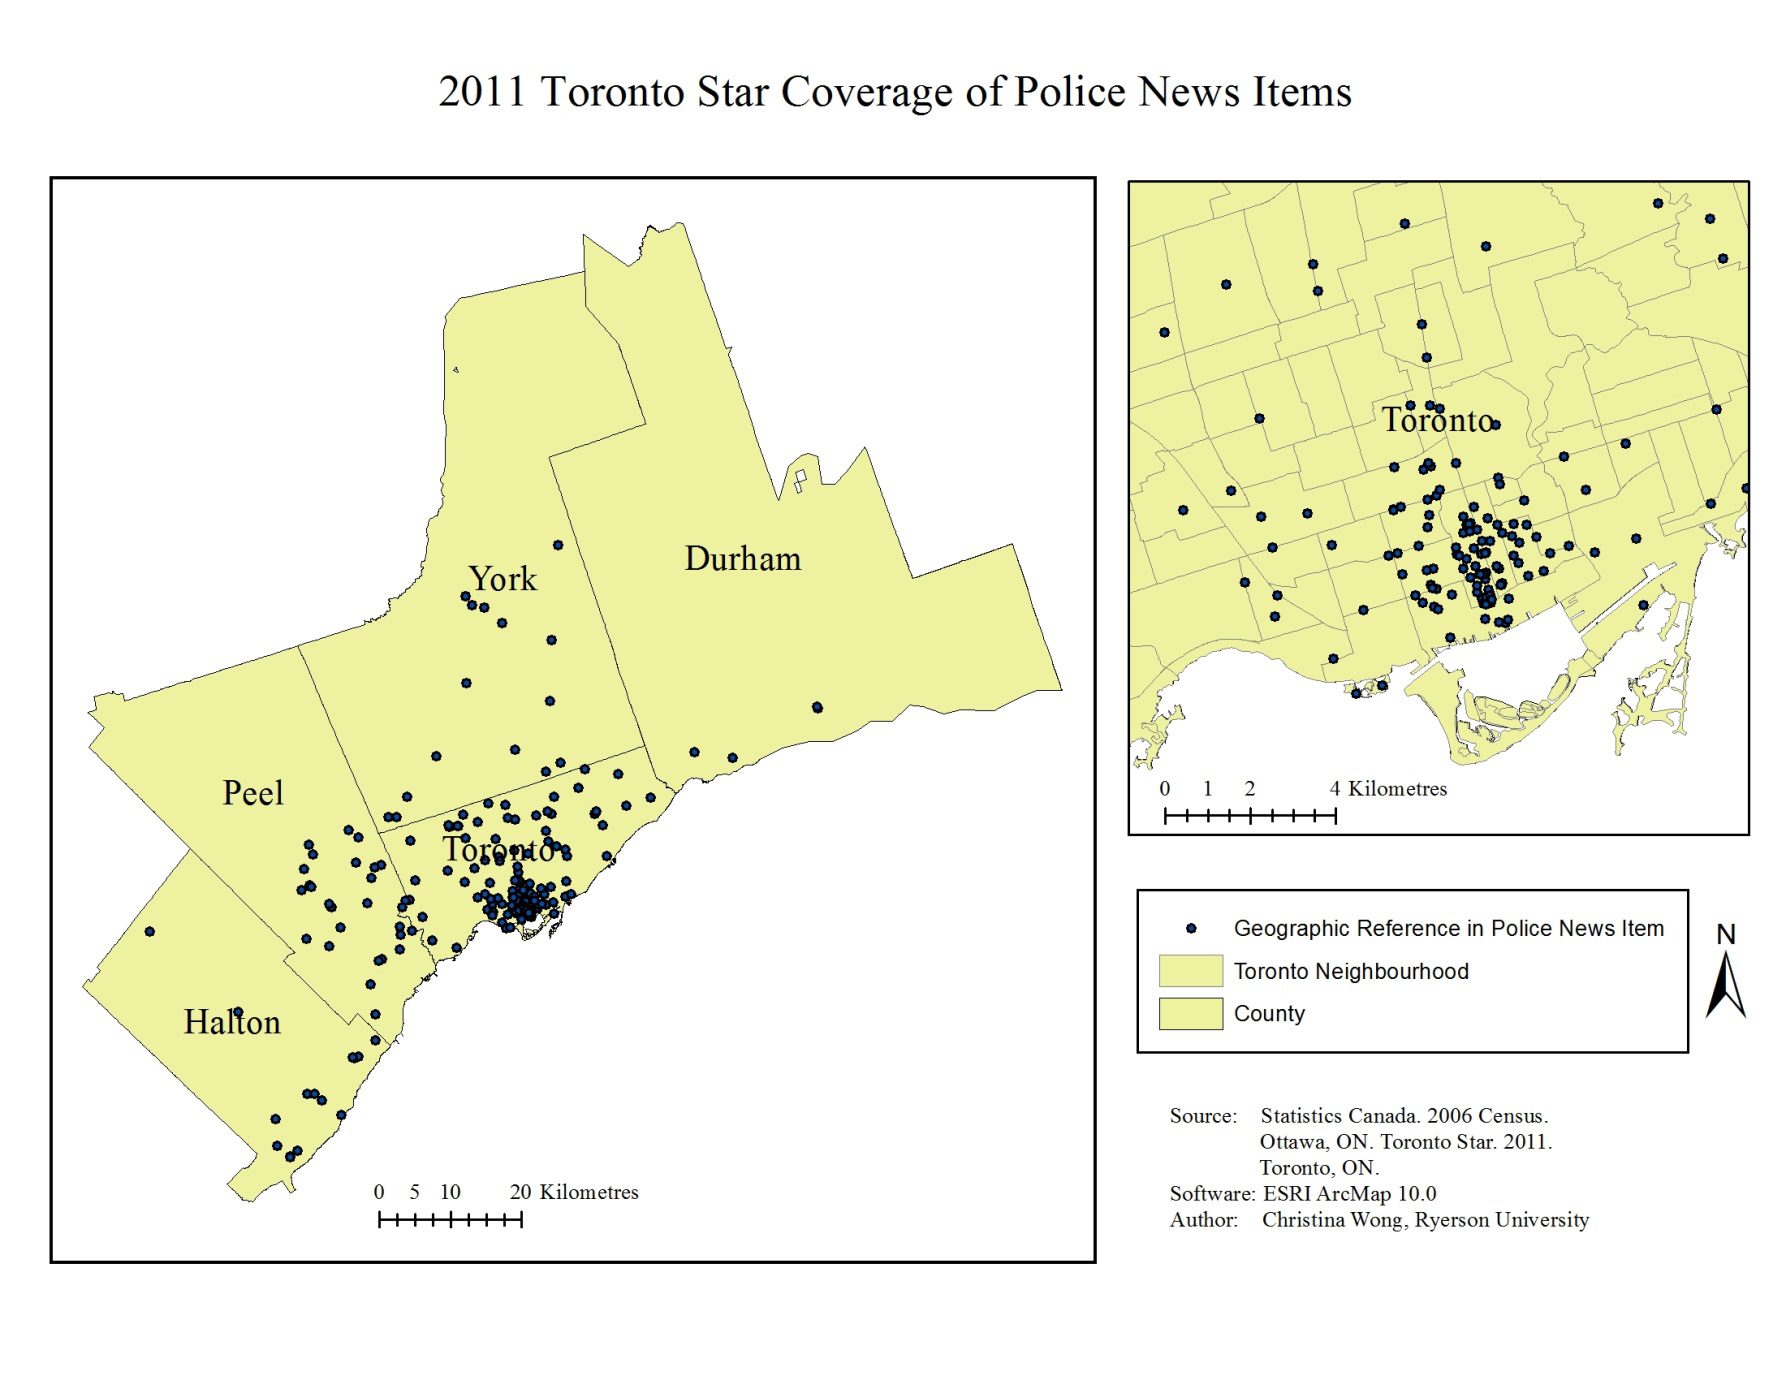 Figure 1. Toronto Star Crime Coverage 